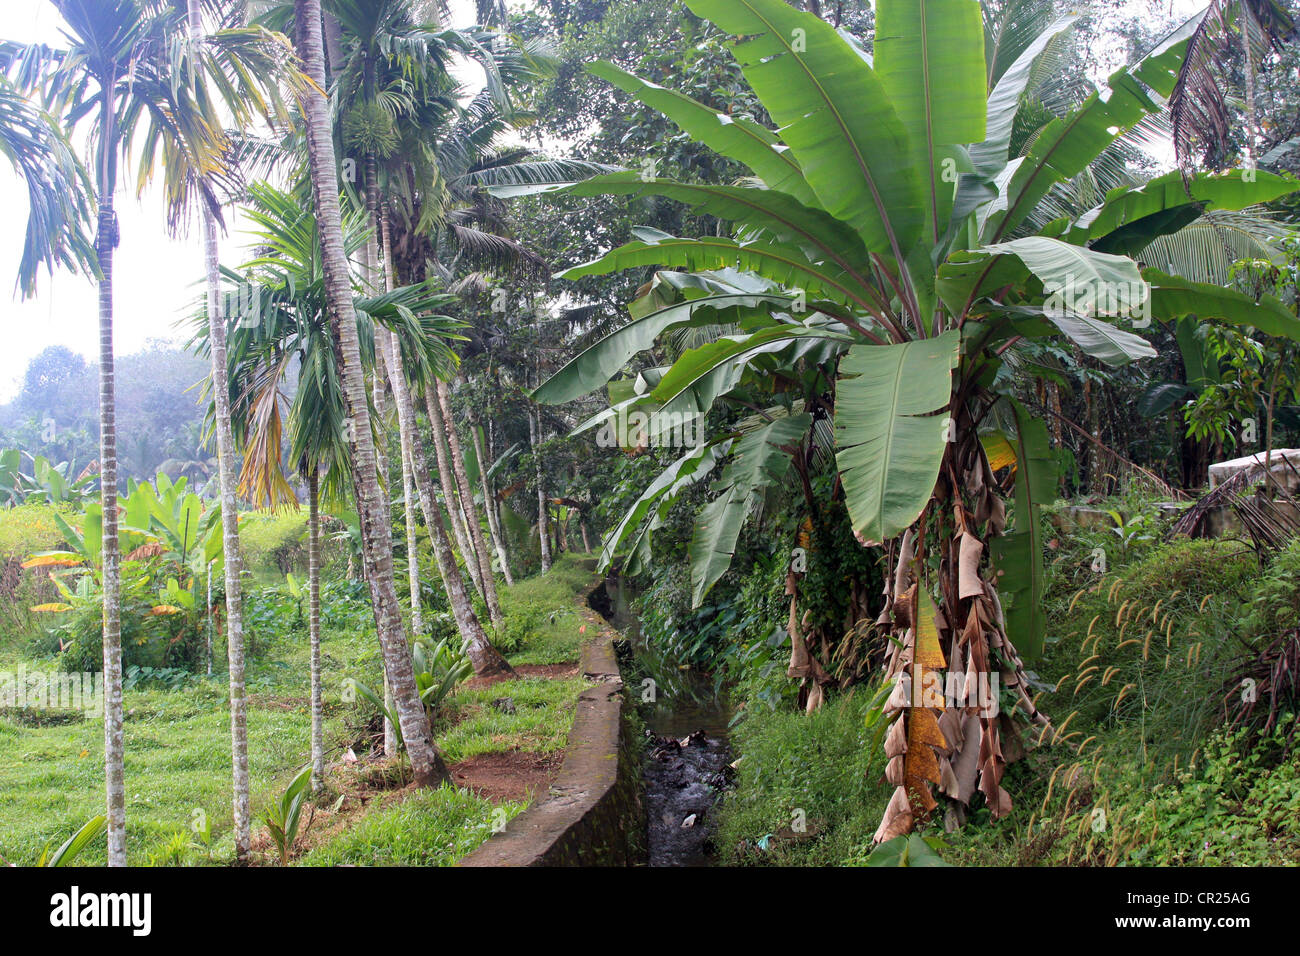 Les terres agricoles Banana tree Arecanut, le bétel tree in Kerala, Inde Banque D'Images